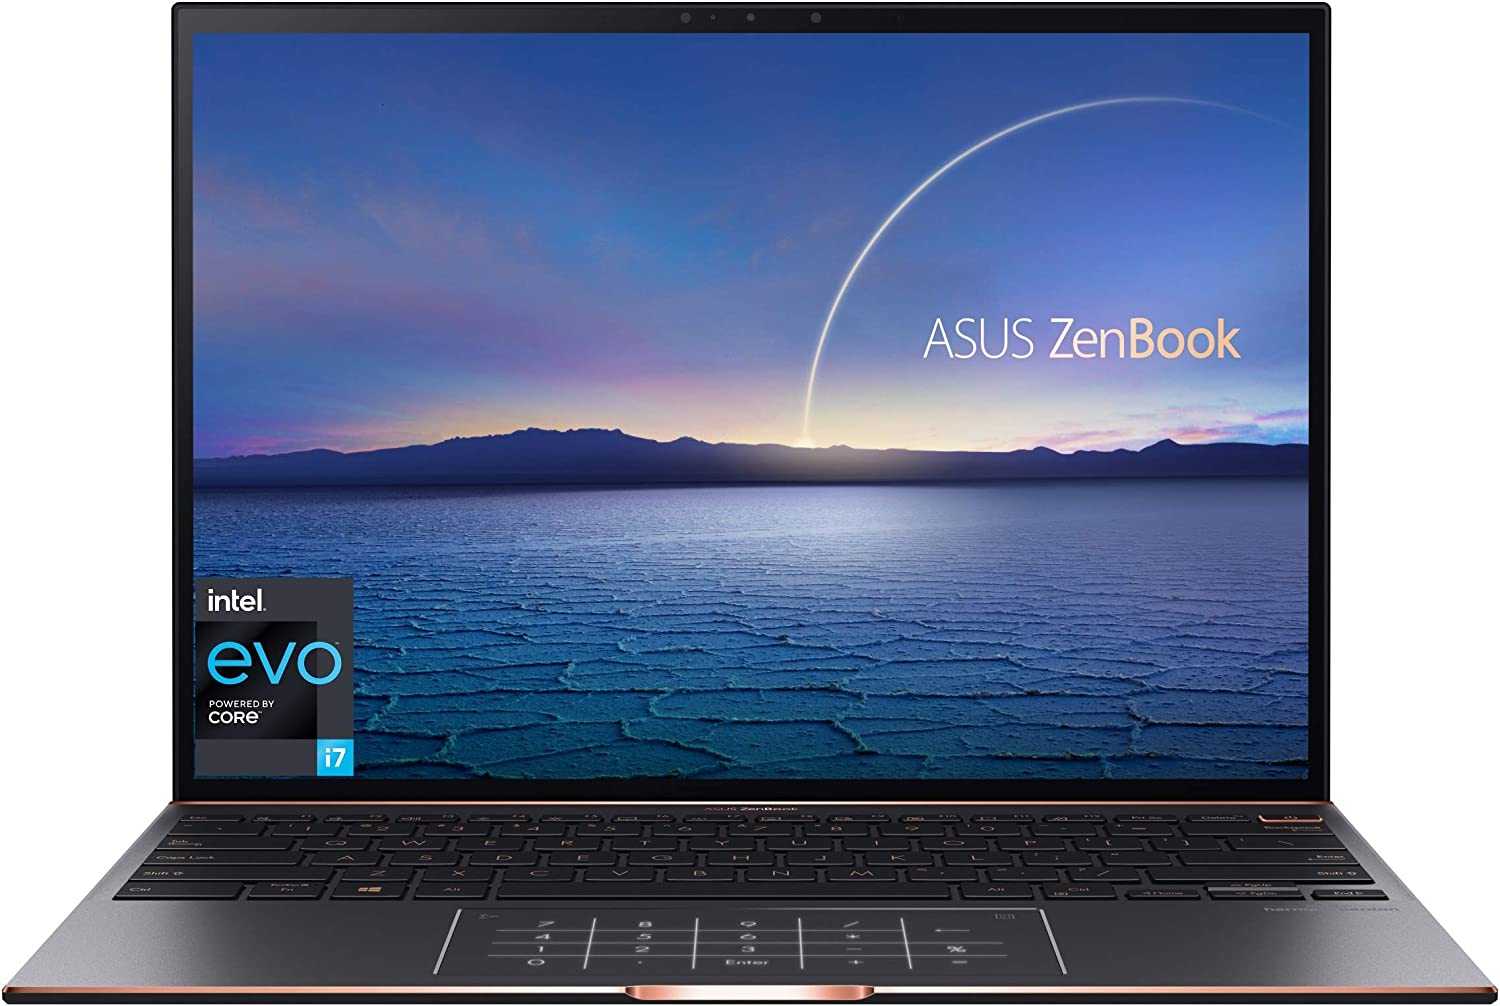 ASUS ZenBook S Ultra Slim laptop